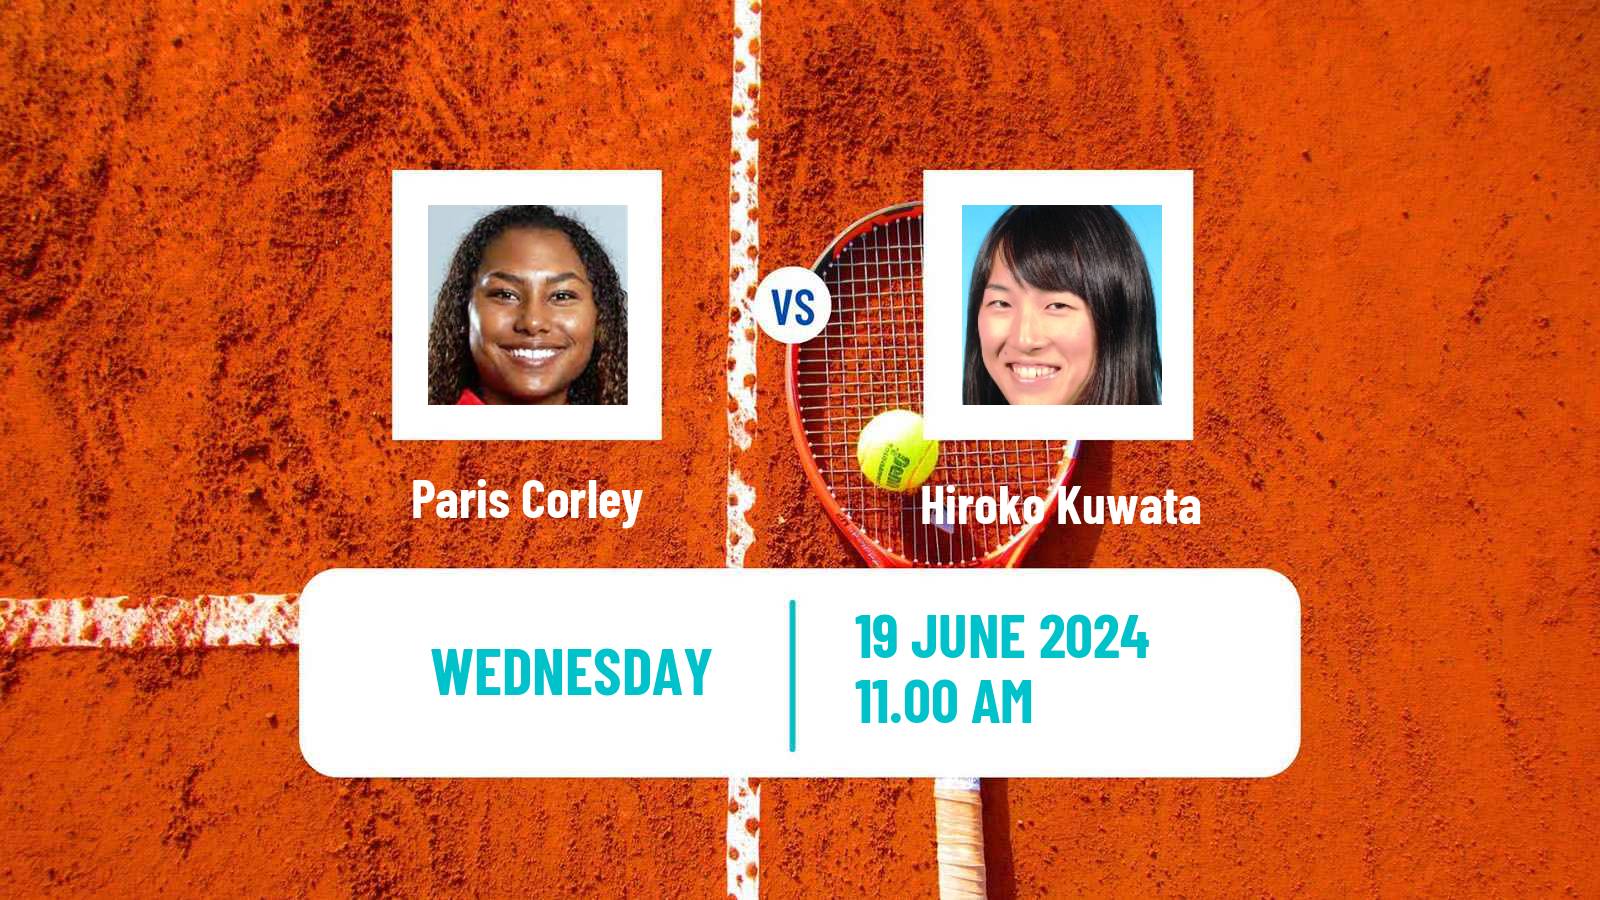 Tennis ITF W35 Wichita Ks Women Paris Corley - Hiroko Kuwata